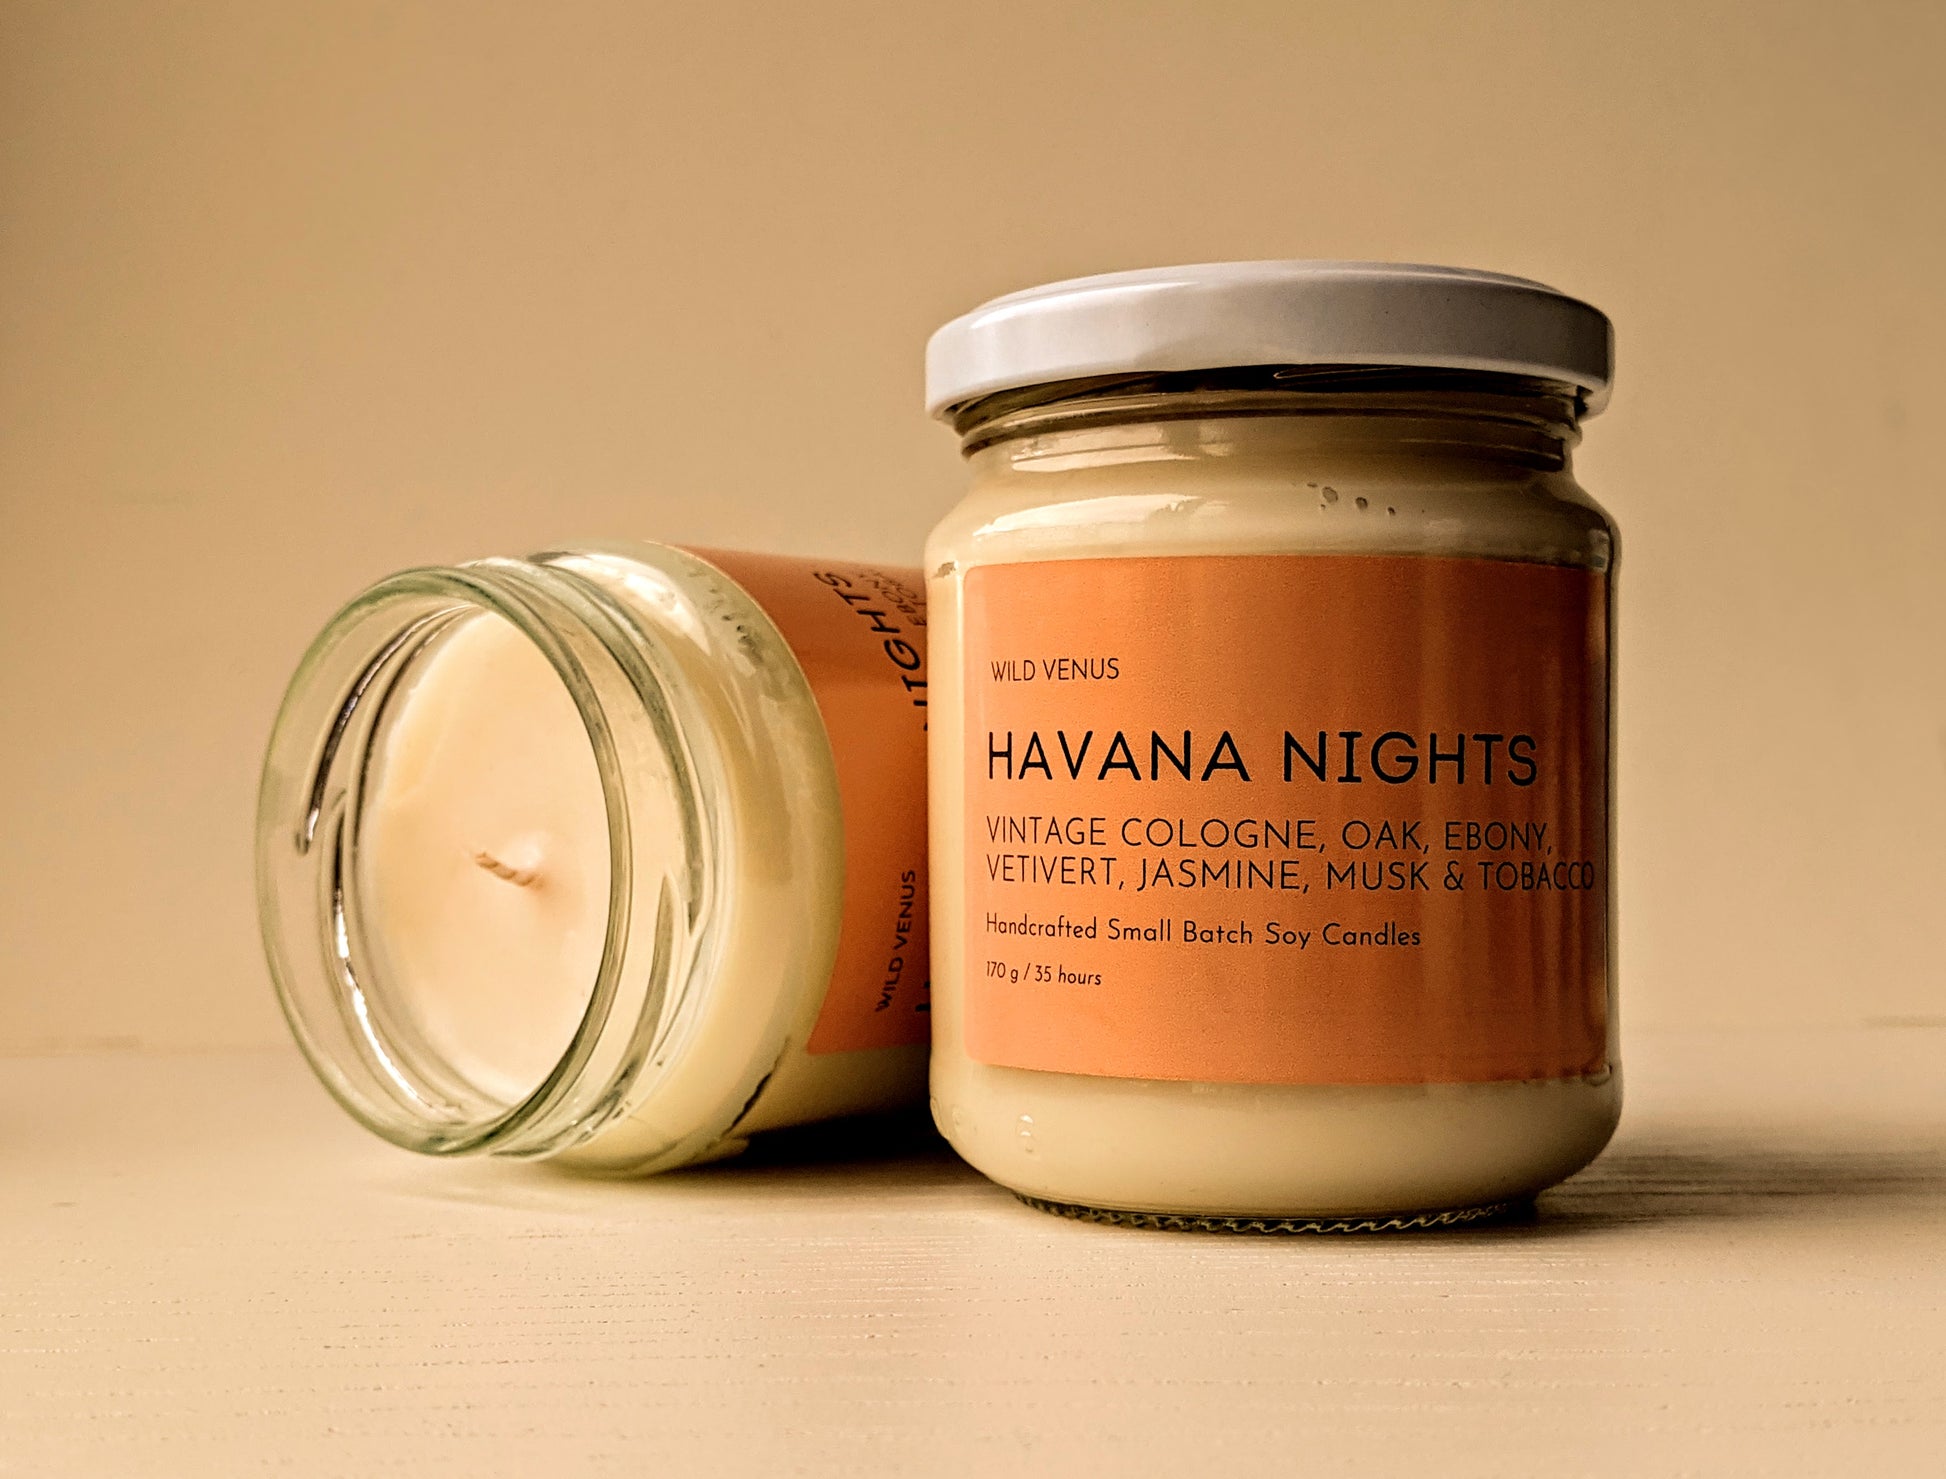 Two Havana Nights candles with an orange hue. 